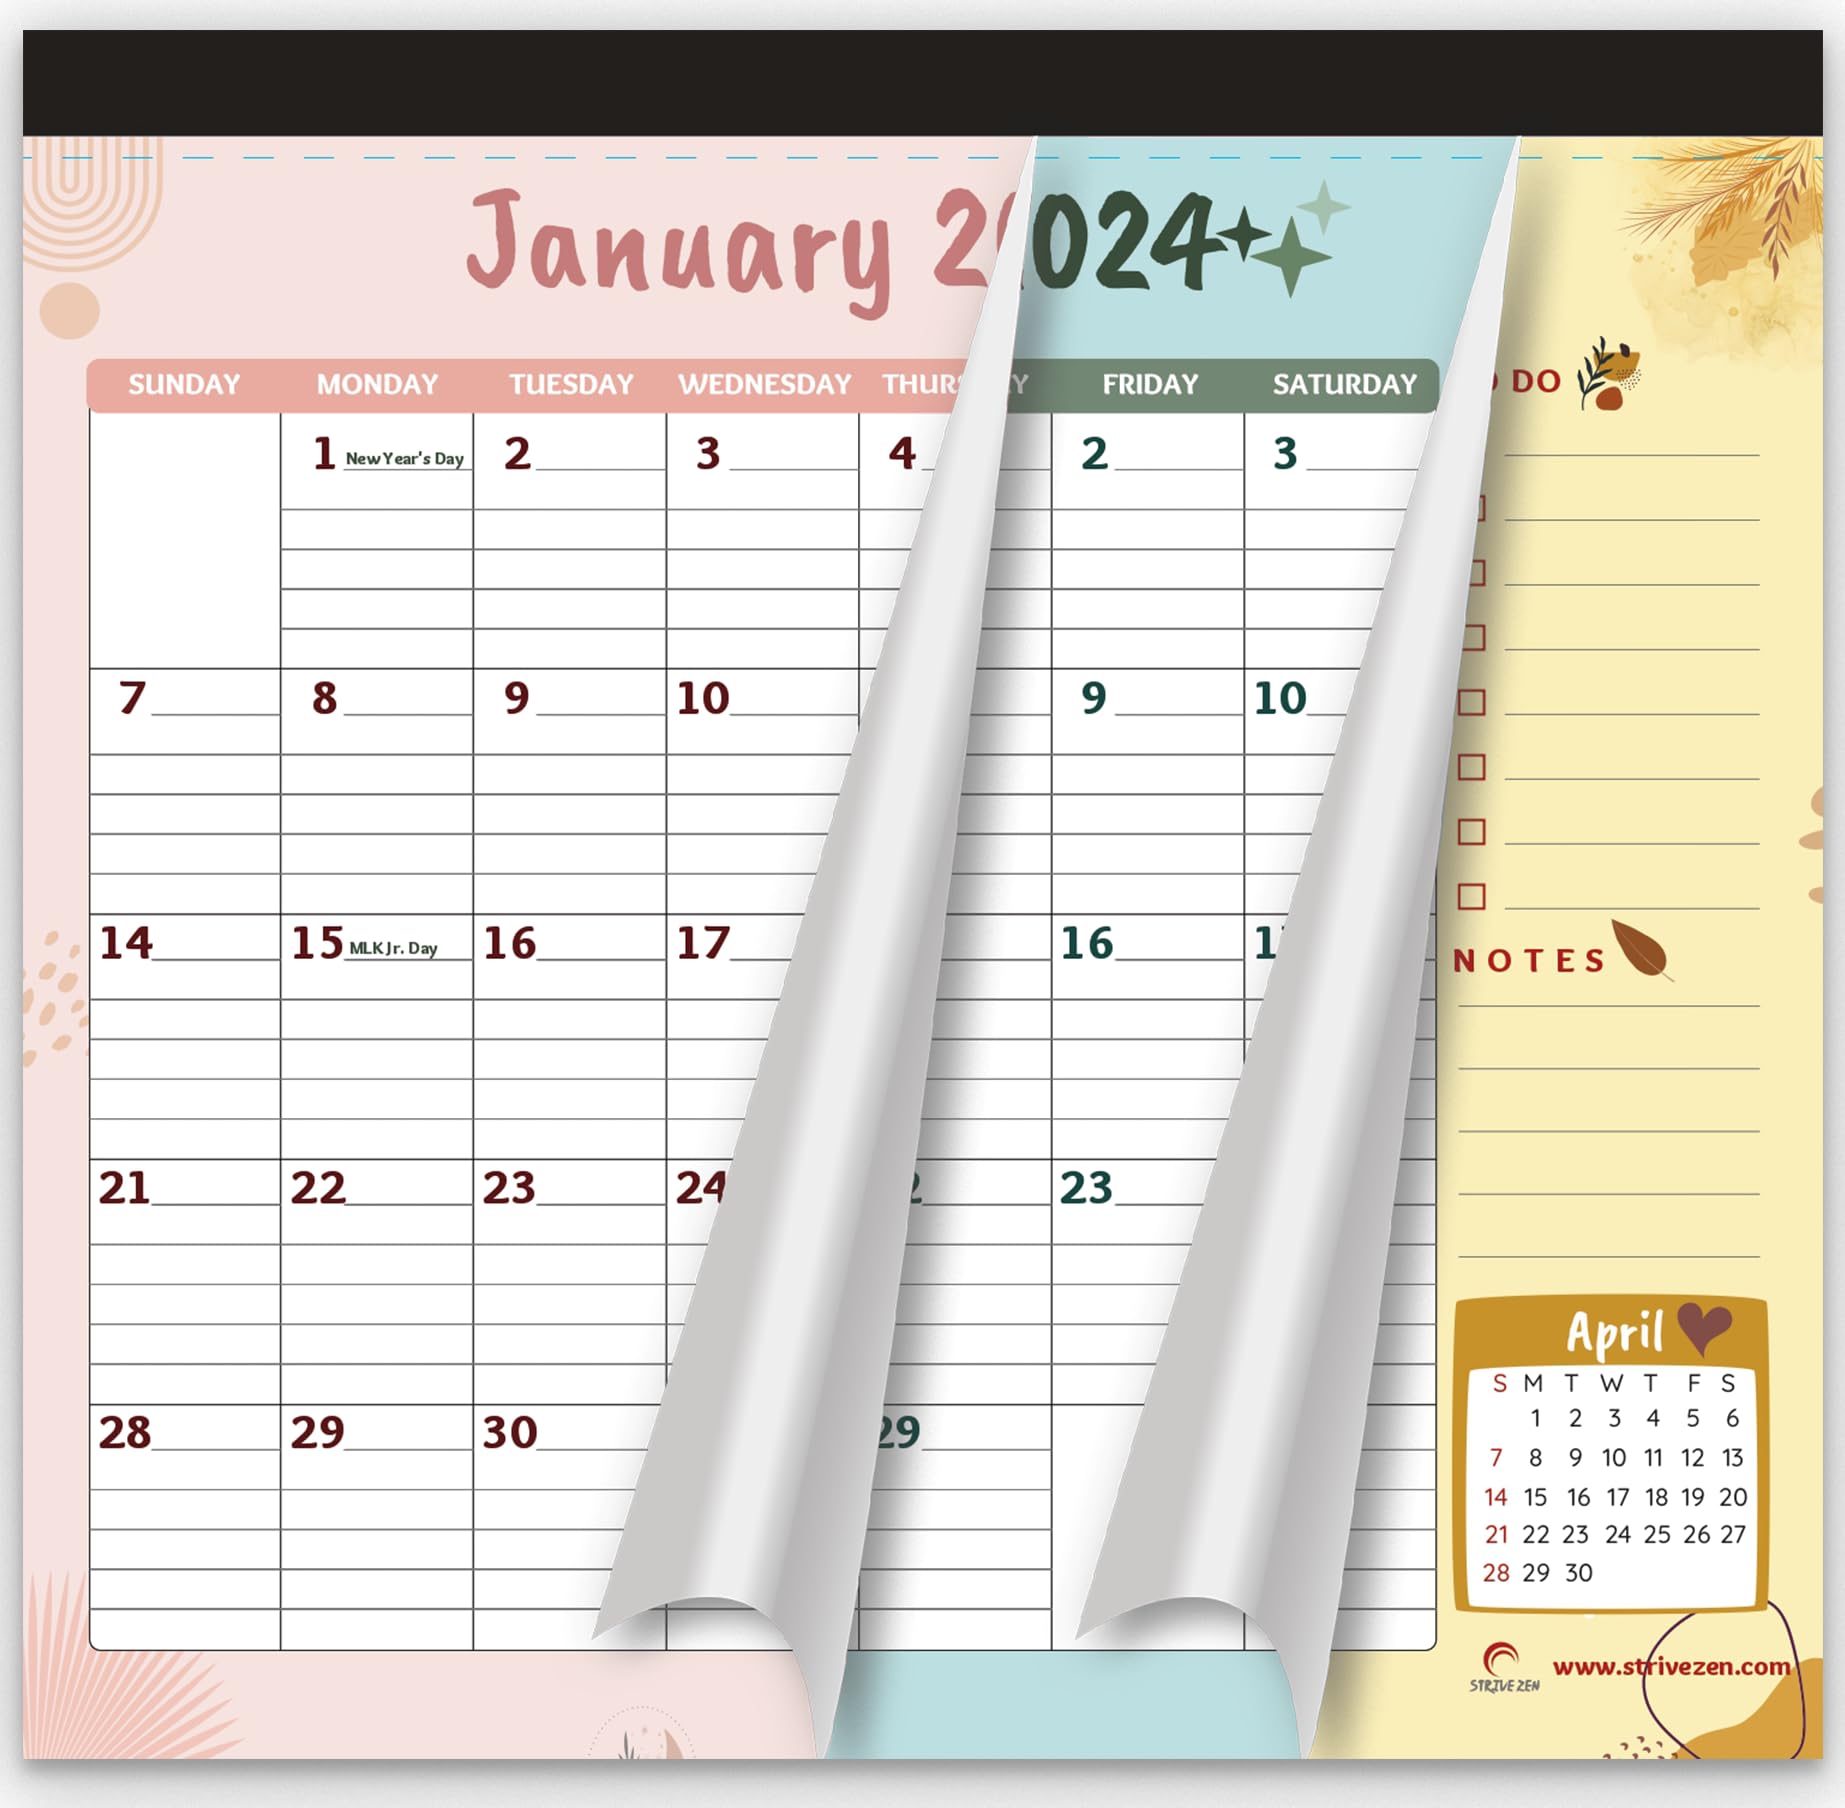 Fridge Calendar 2024 2025 by StriveZen, Magnetic, Monthly 10x10 Inch, Academic, Refrigerator, Desktop, Gift, Teacher Family Busy Mom Office, January 2024- December 2025